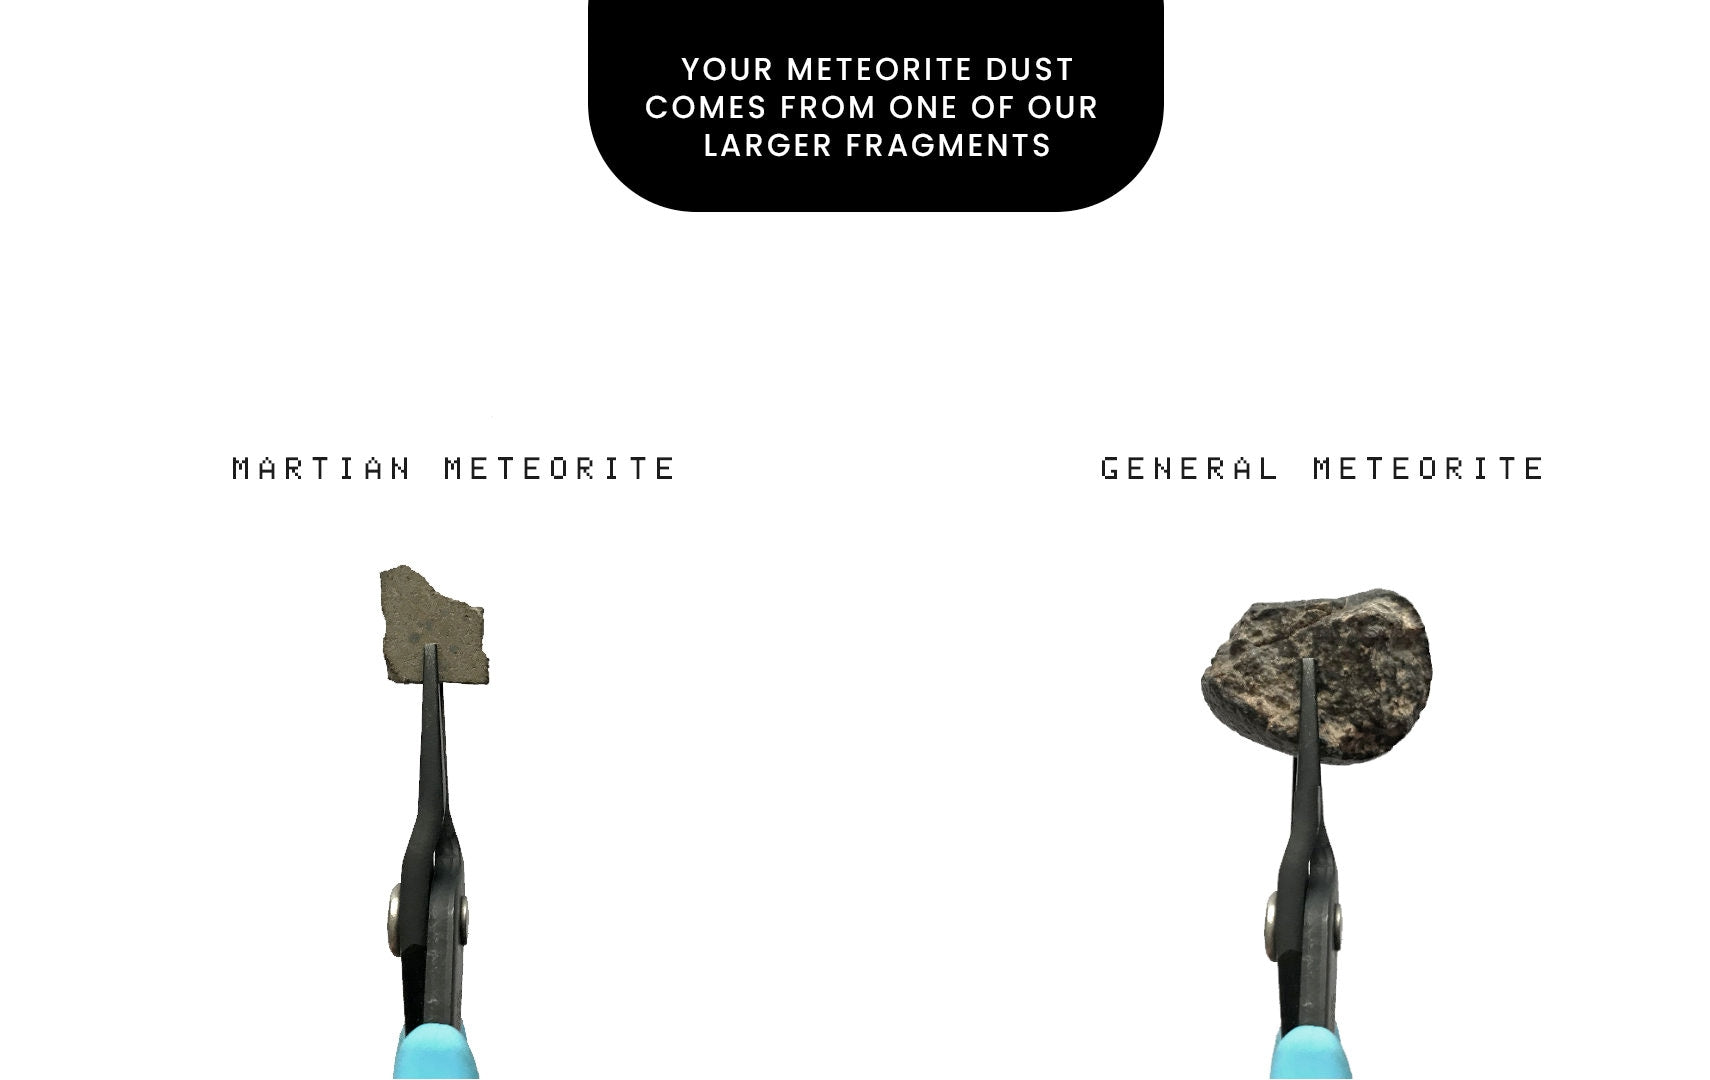 Meteorite Fragment Time Capsule - Men's Stainless Steel Space Keychain / Gift - EDC Carabiner